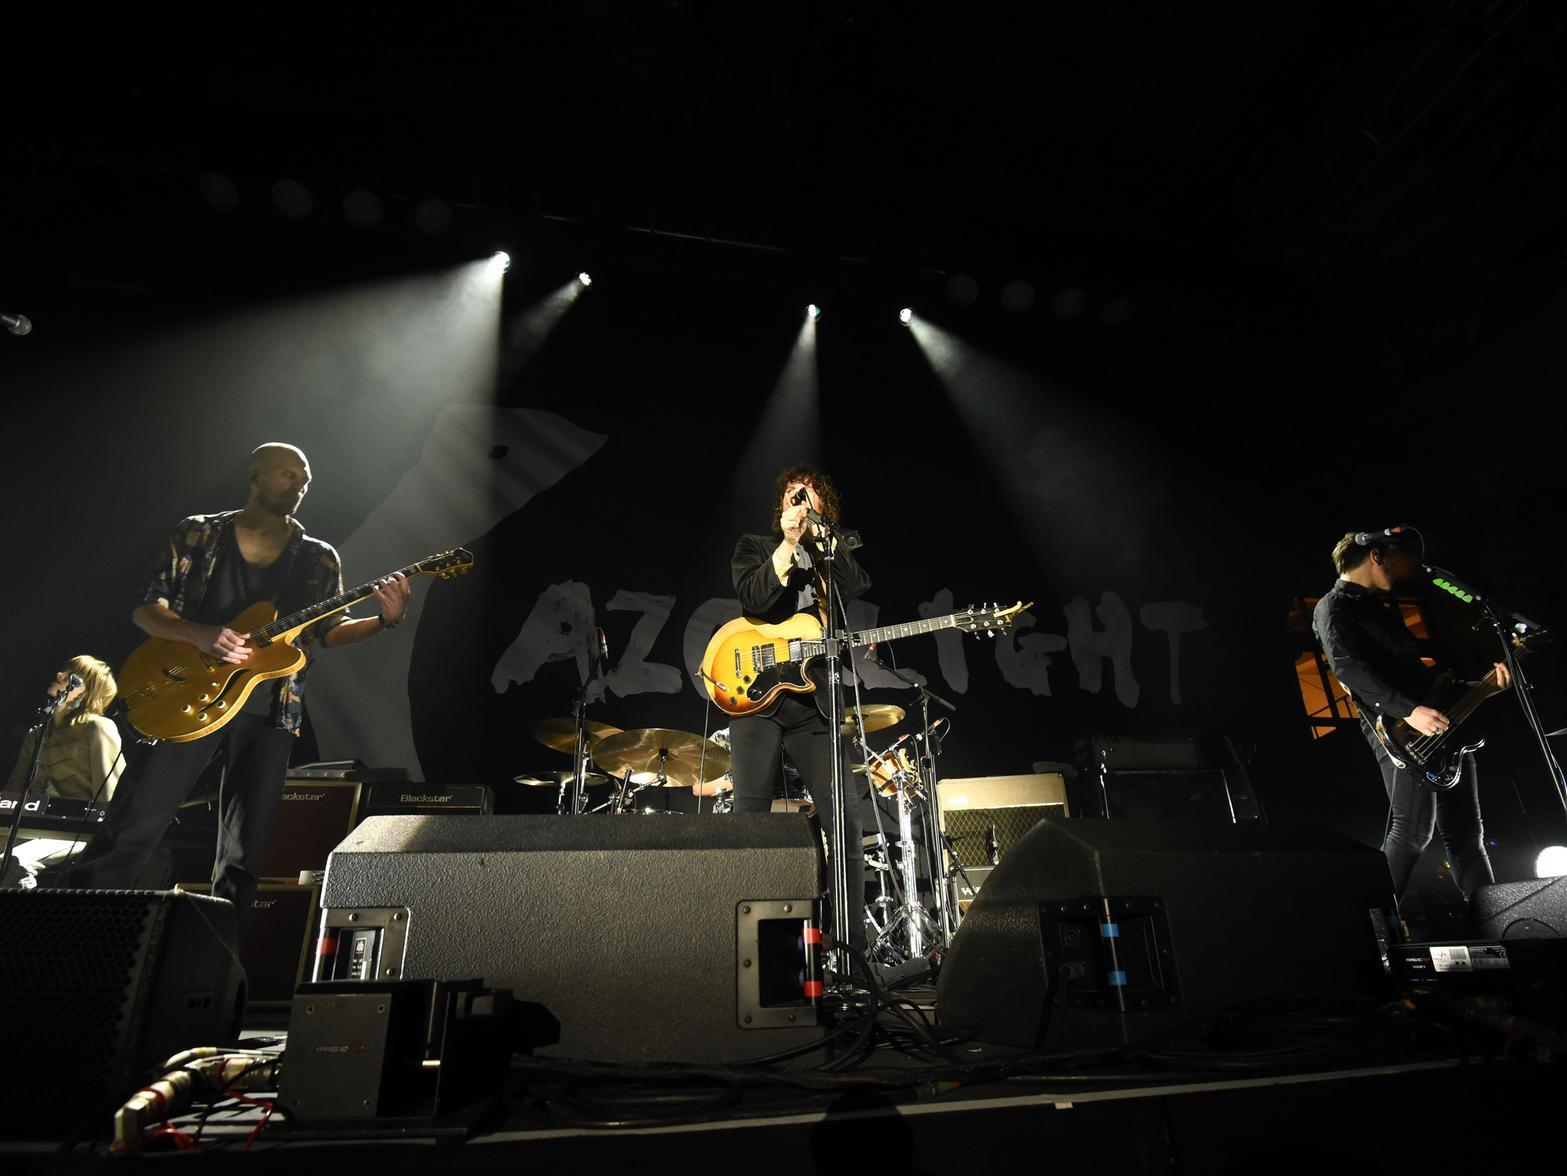 Razorlight supported indie rock superstars the Kaiser Chiefs on Friday night.